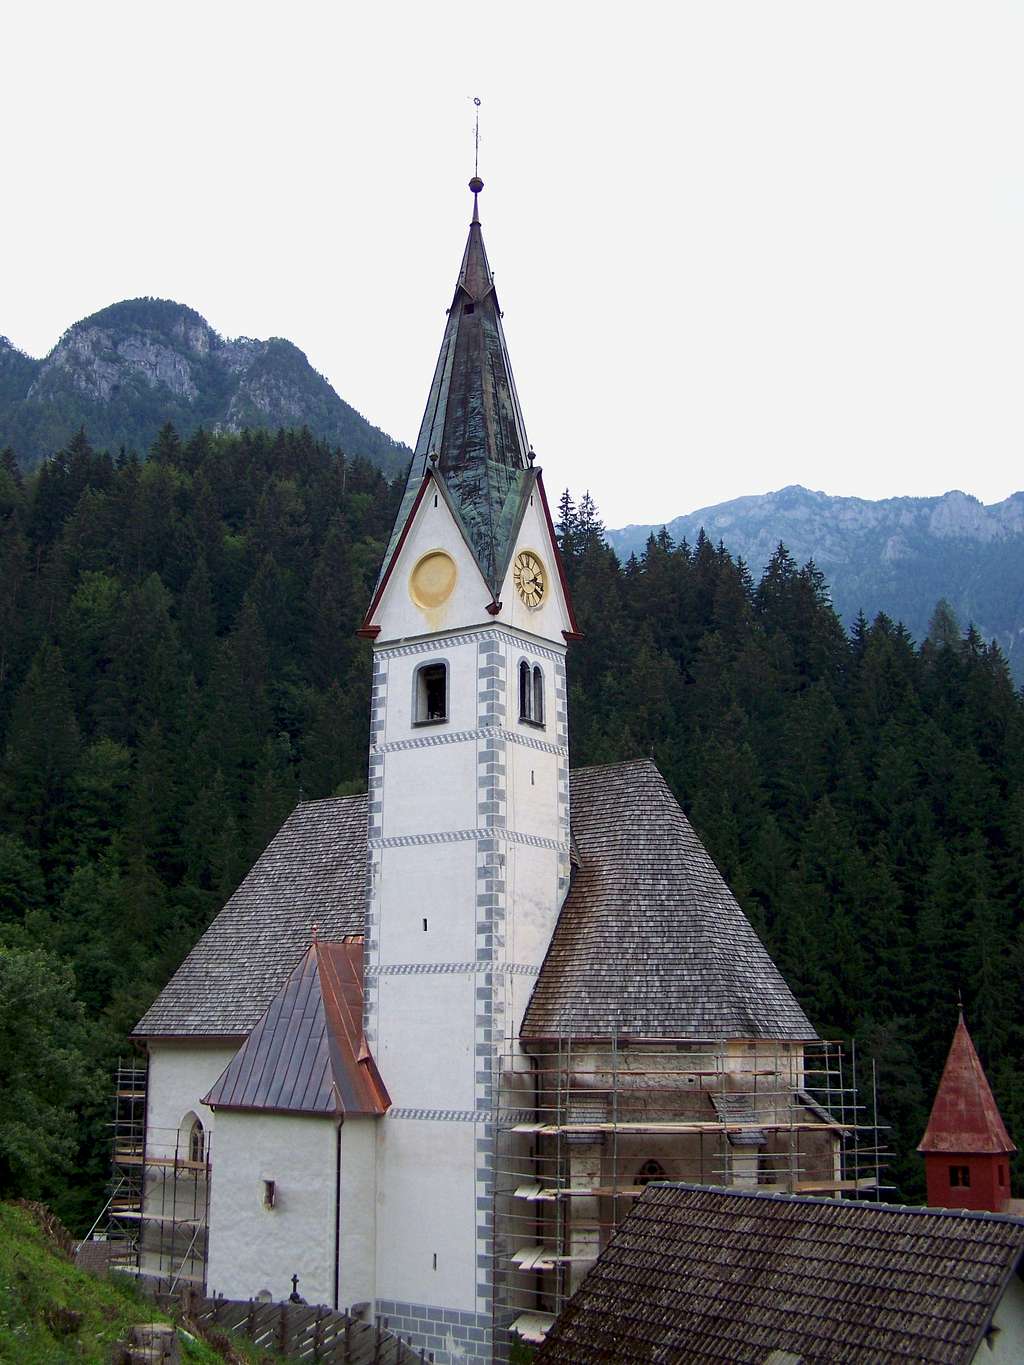 The parish church of Solcava